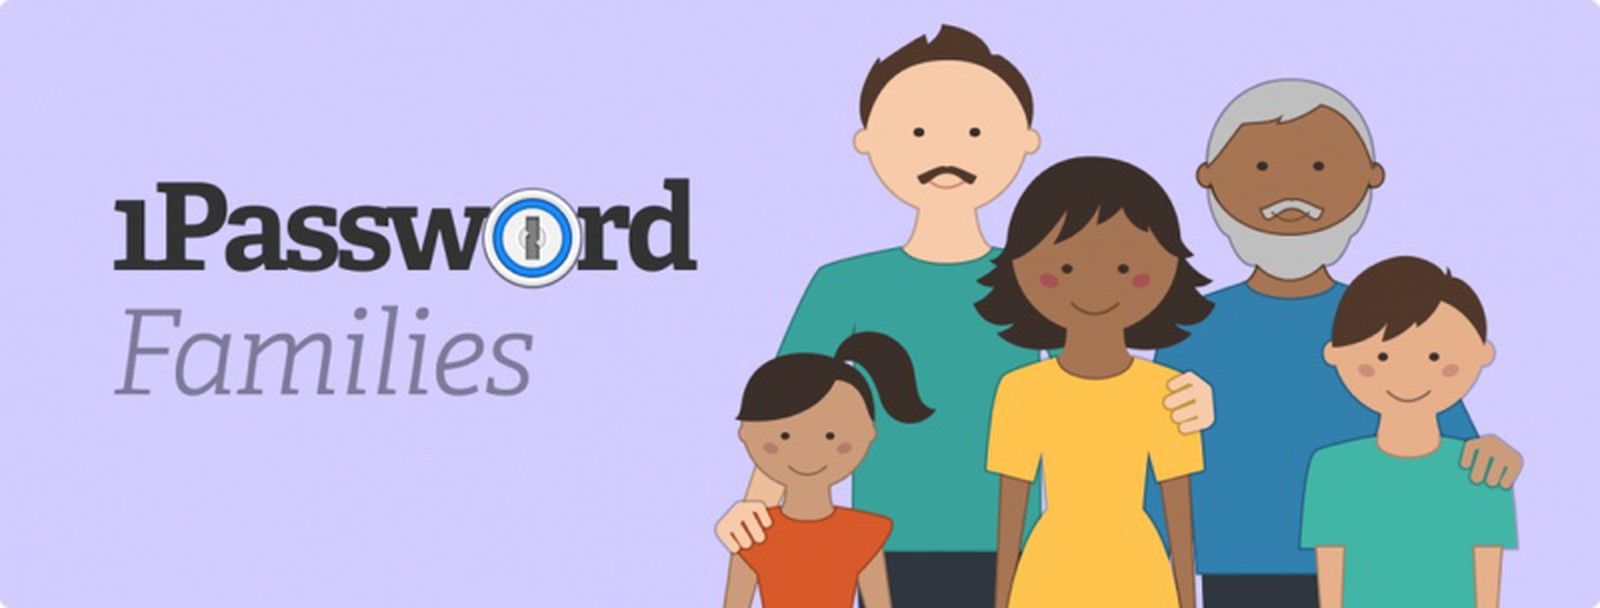 1password families plan